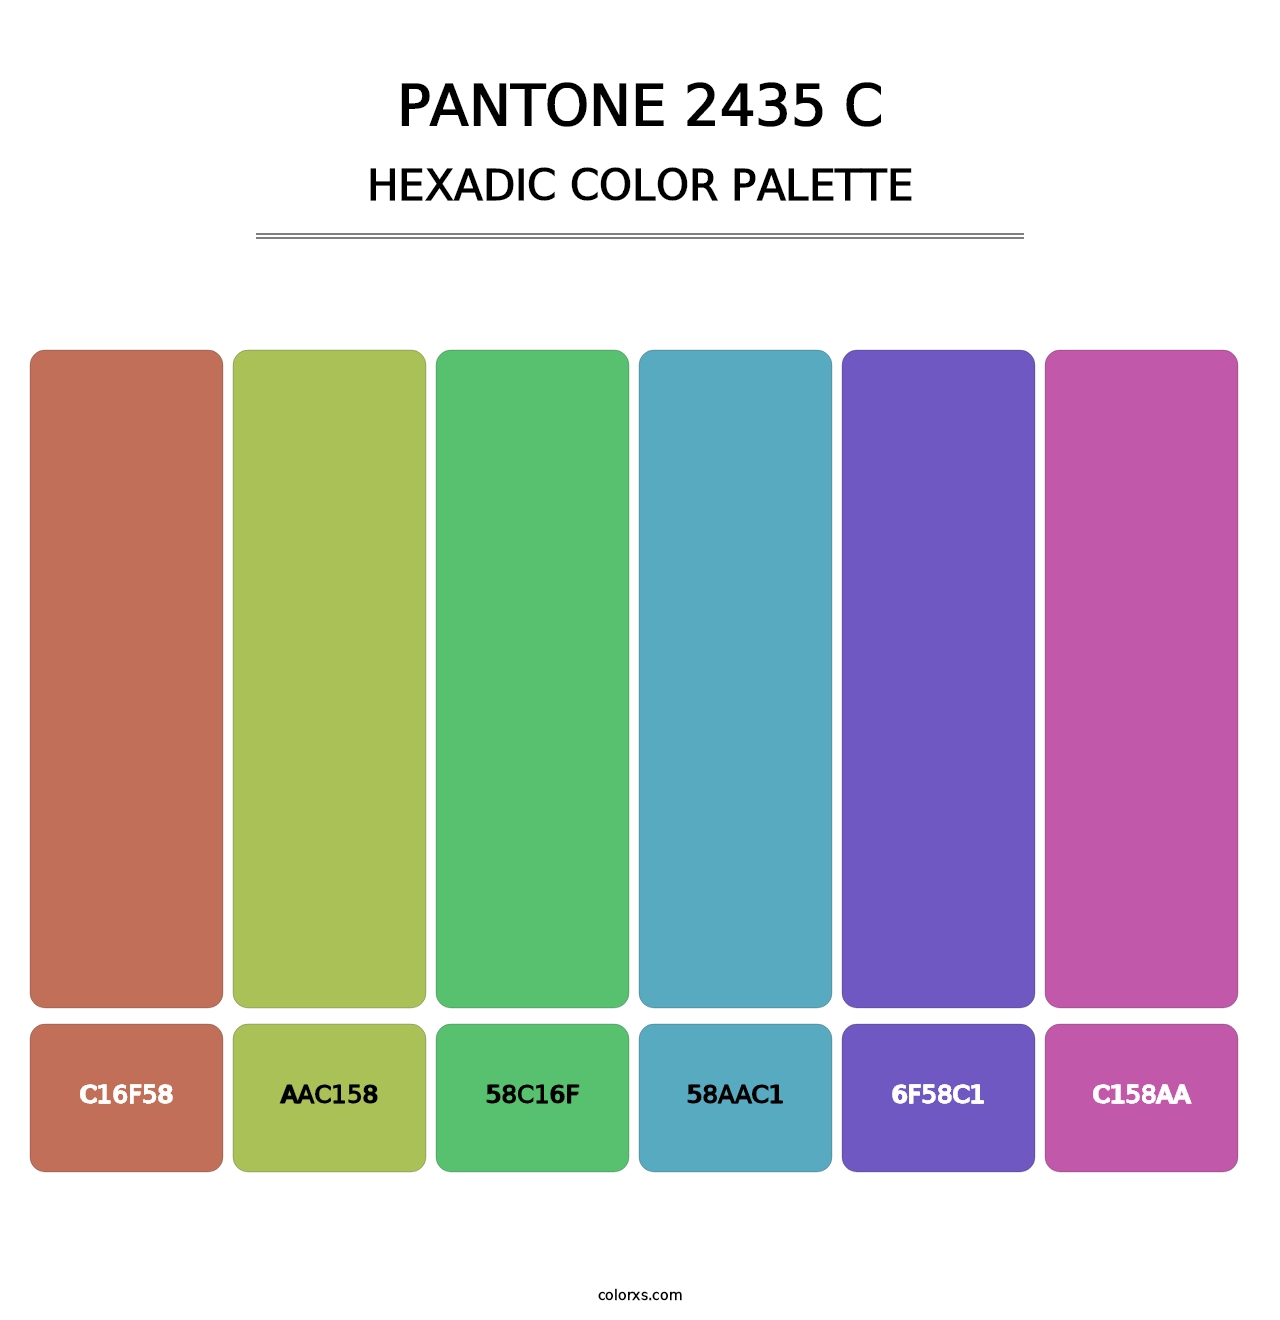 PANTONE 2435 C - Hexadic Color Palette